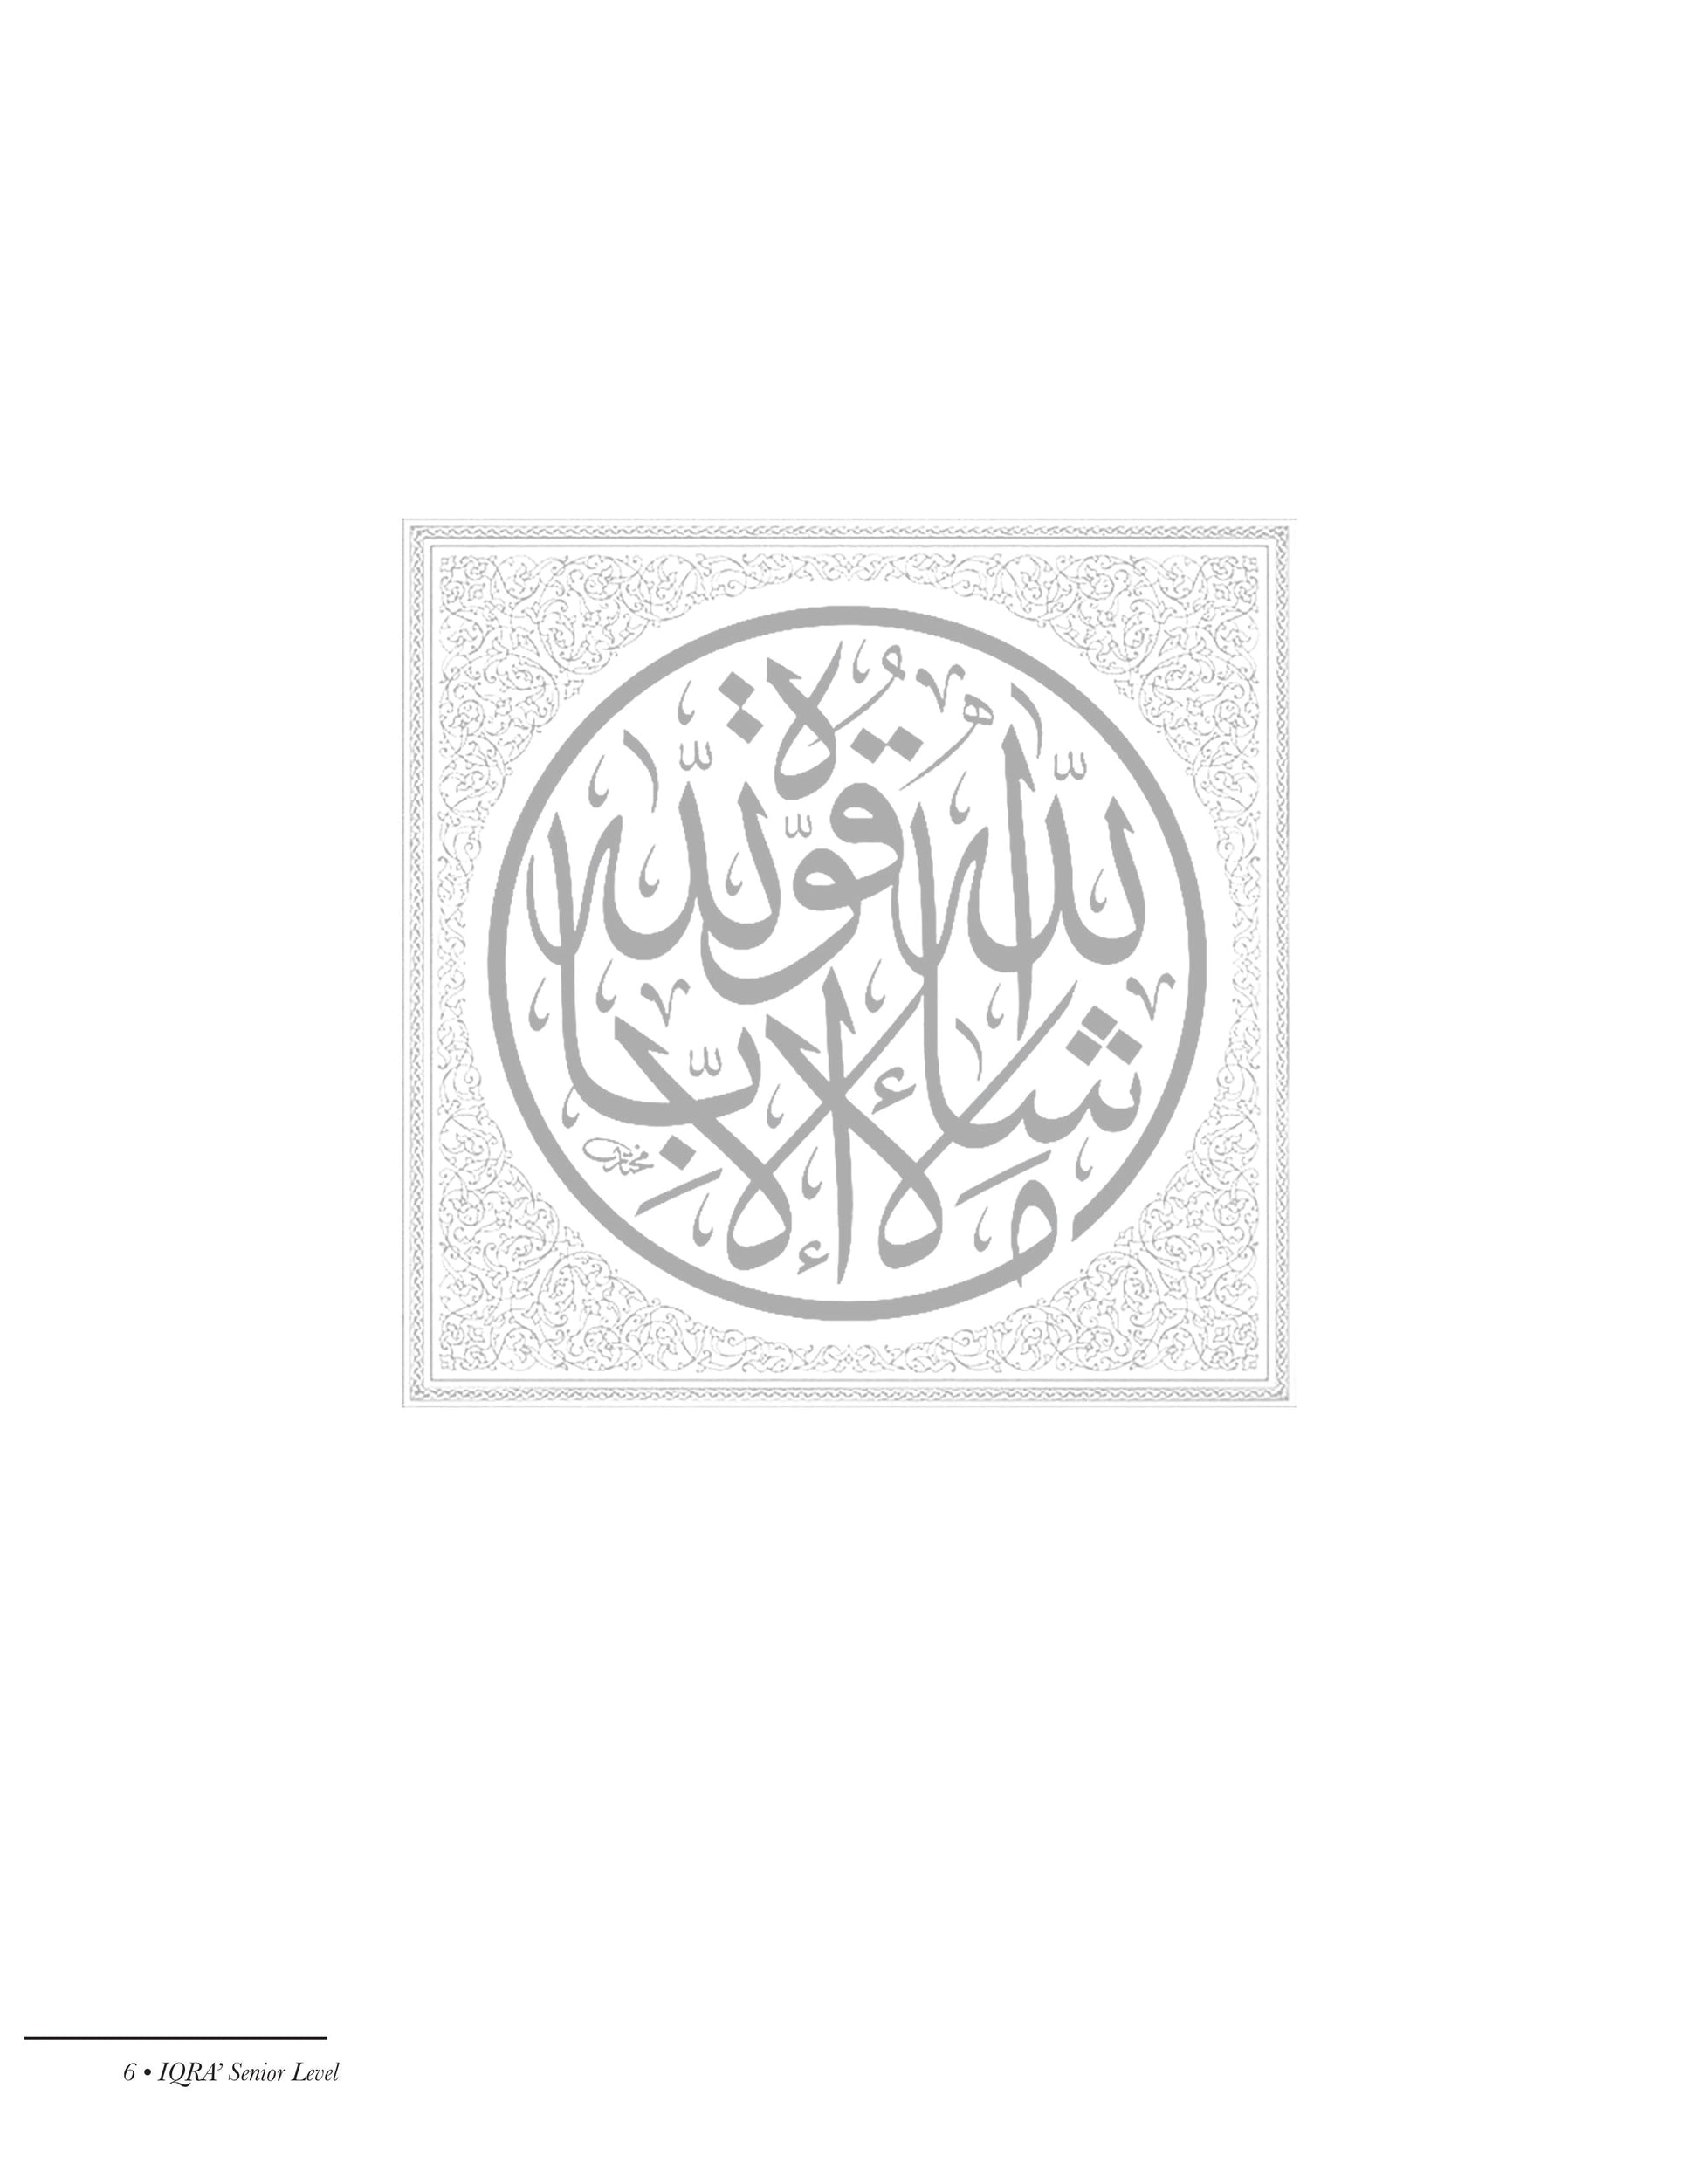 Principle of Islamic Jurisprudence-Usul al-Fiqh - Premium Textbook from IQRA' international Educational Foundation - Just $20! Shop now at IQRA Book Center 